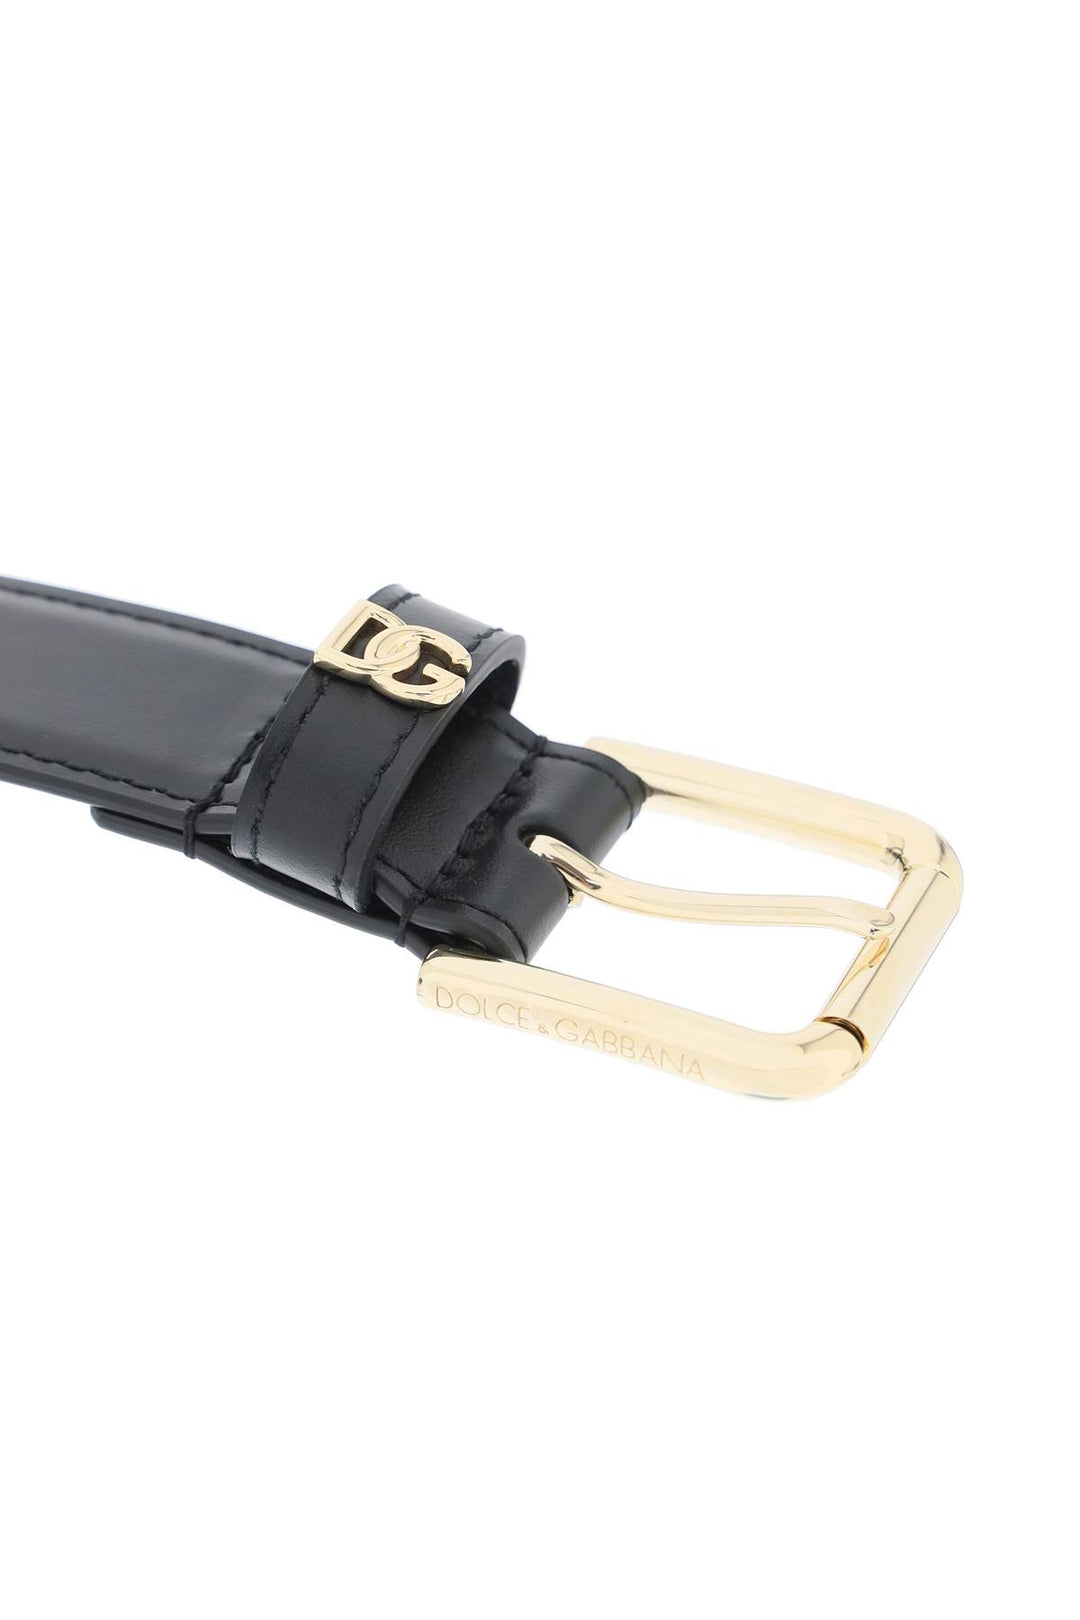 Dolce & Gabbana Dg Logo Leather Belt   Black